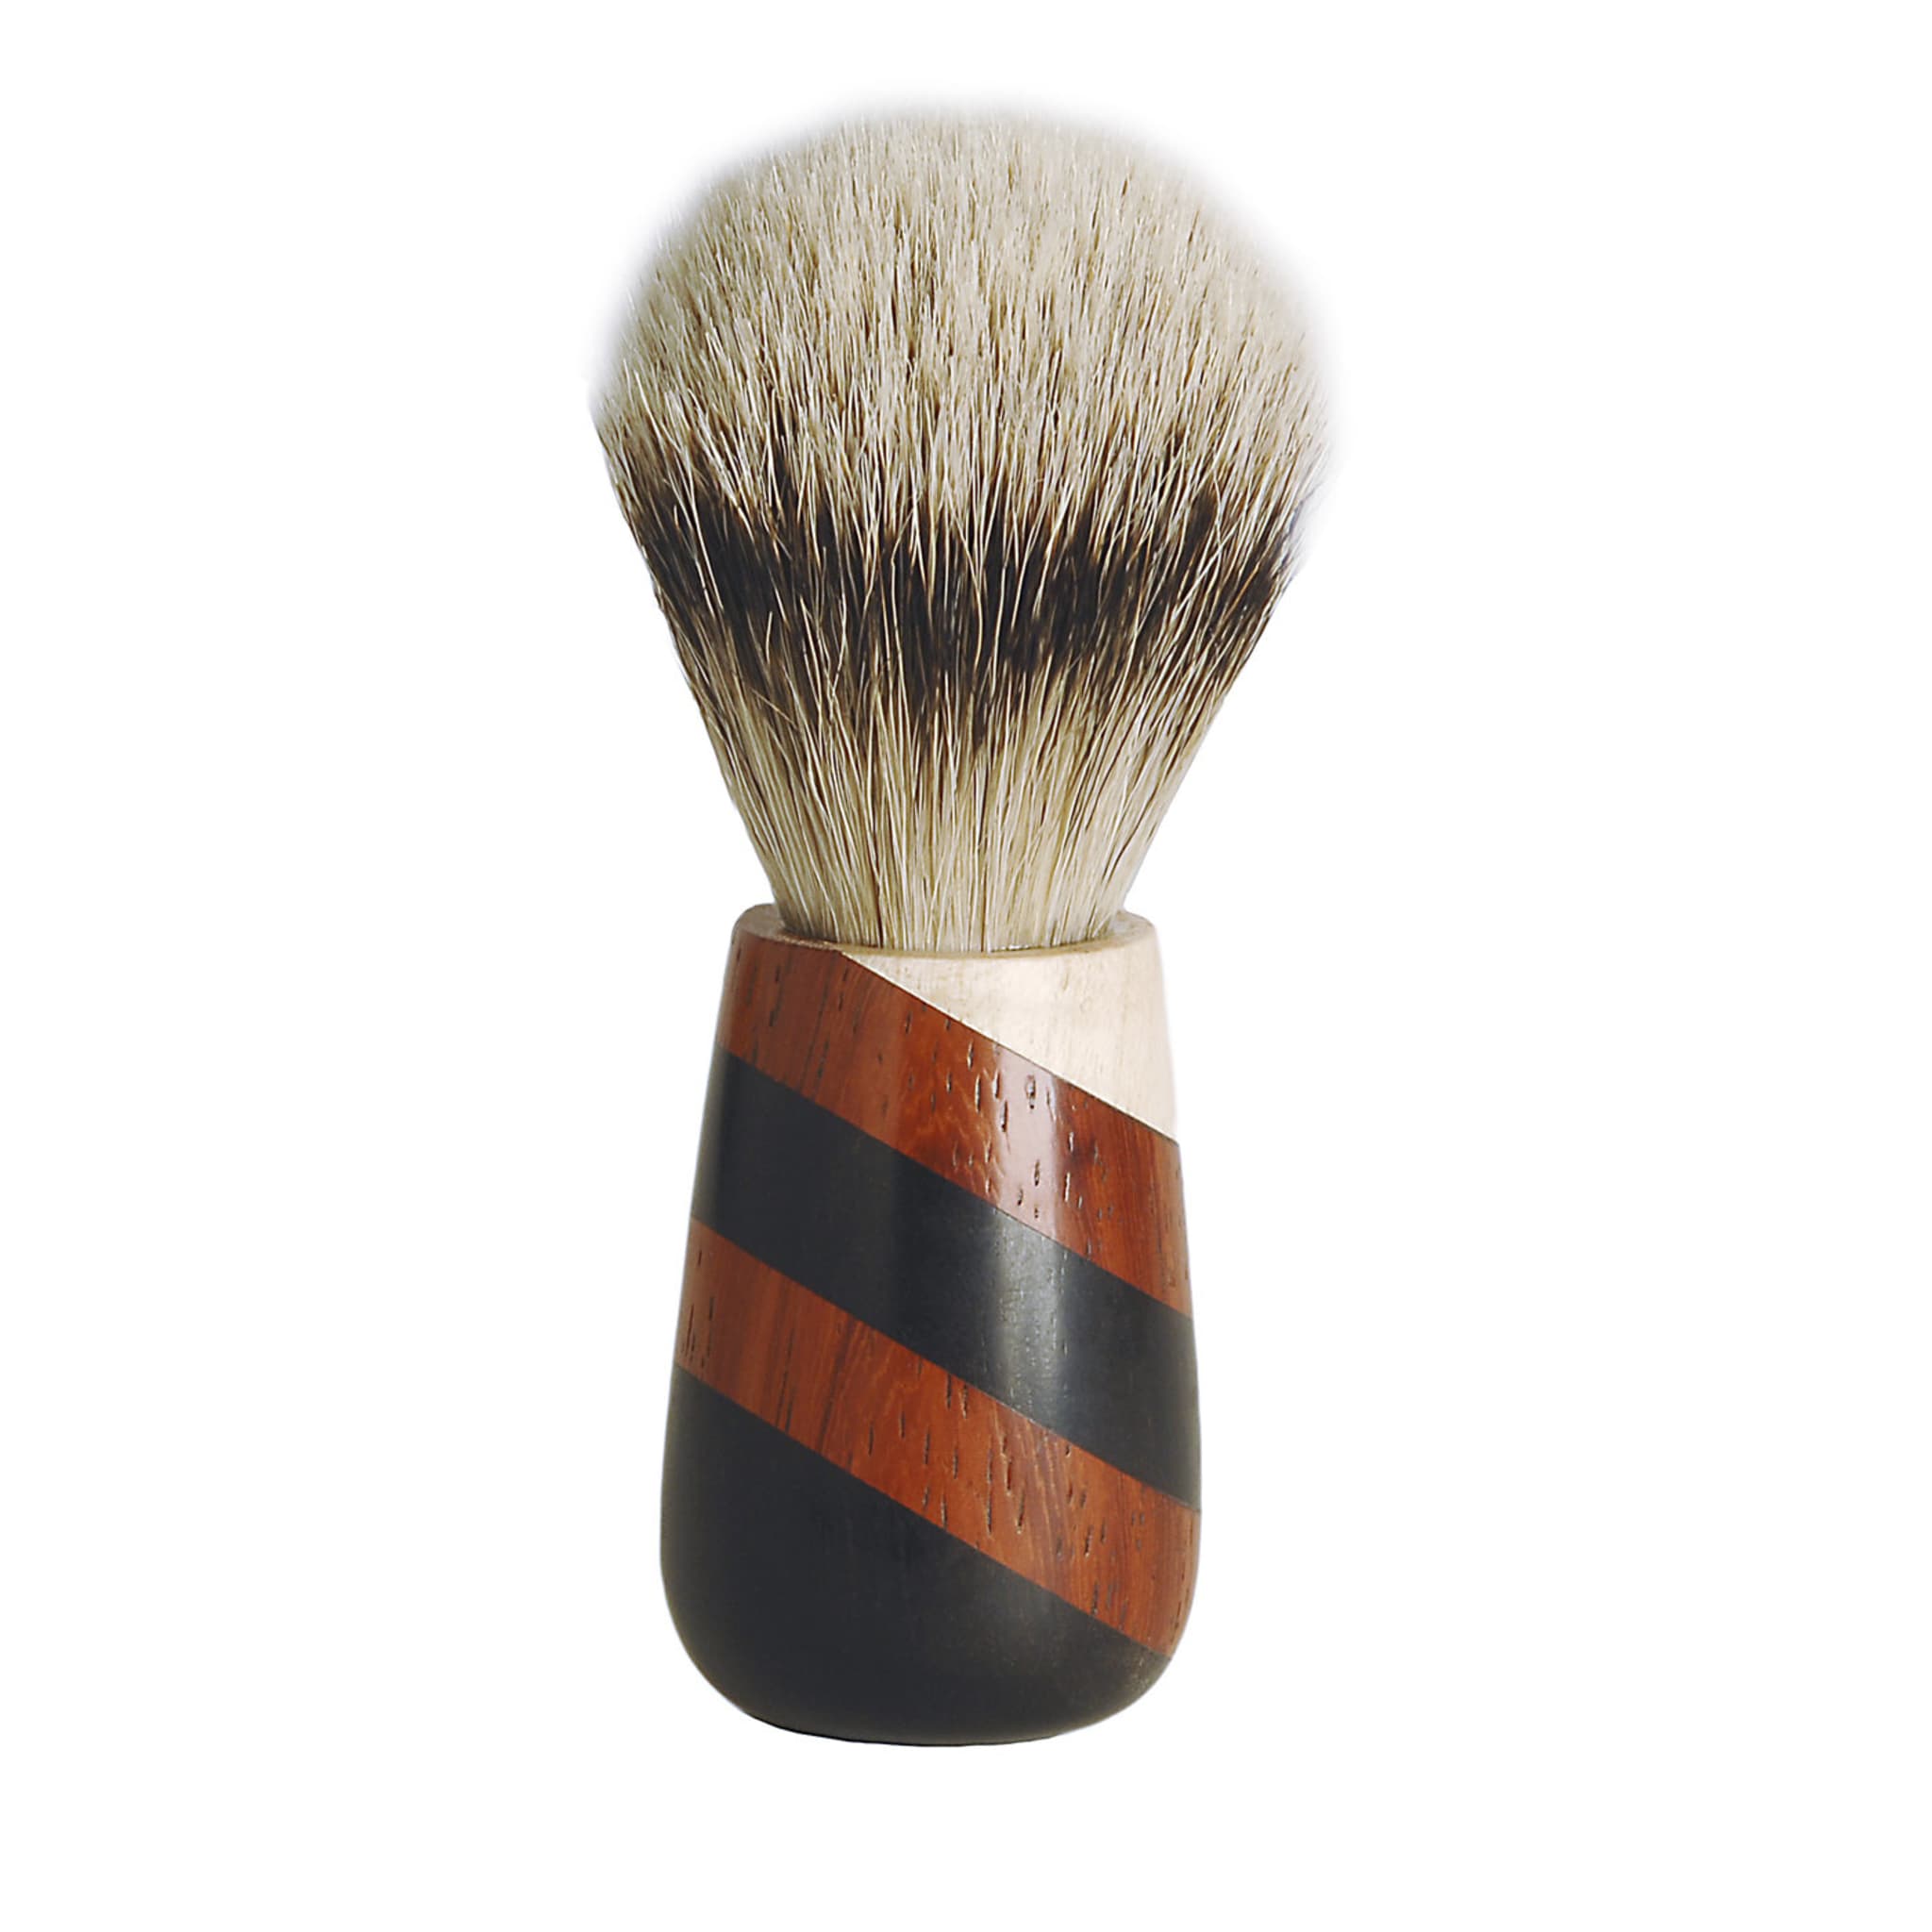 Striped Shaving Brush in Ebony, Padauk and Maple Wood - Main view